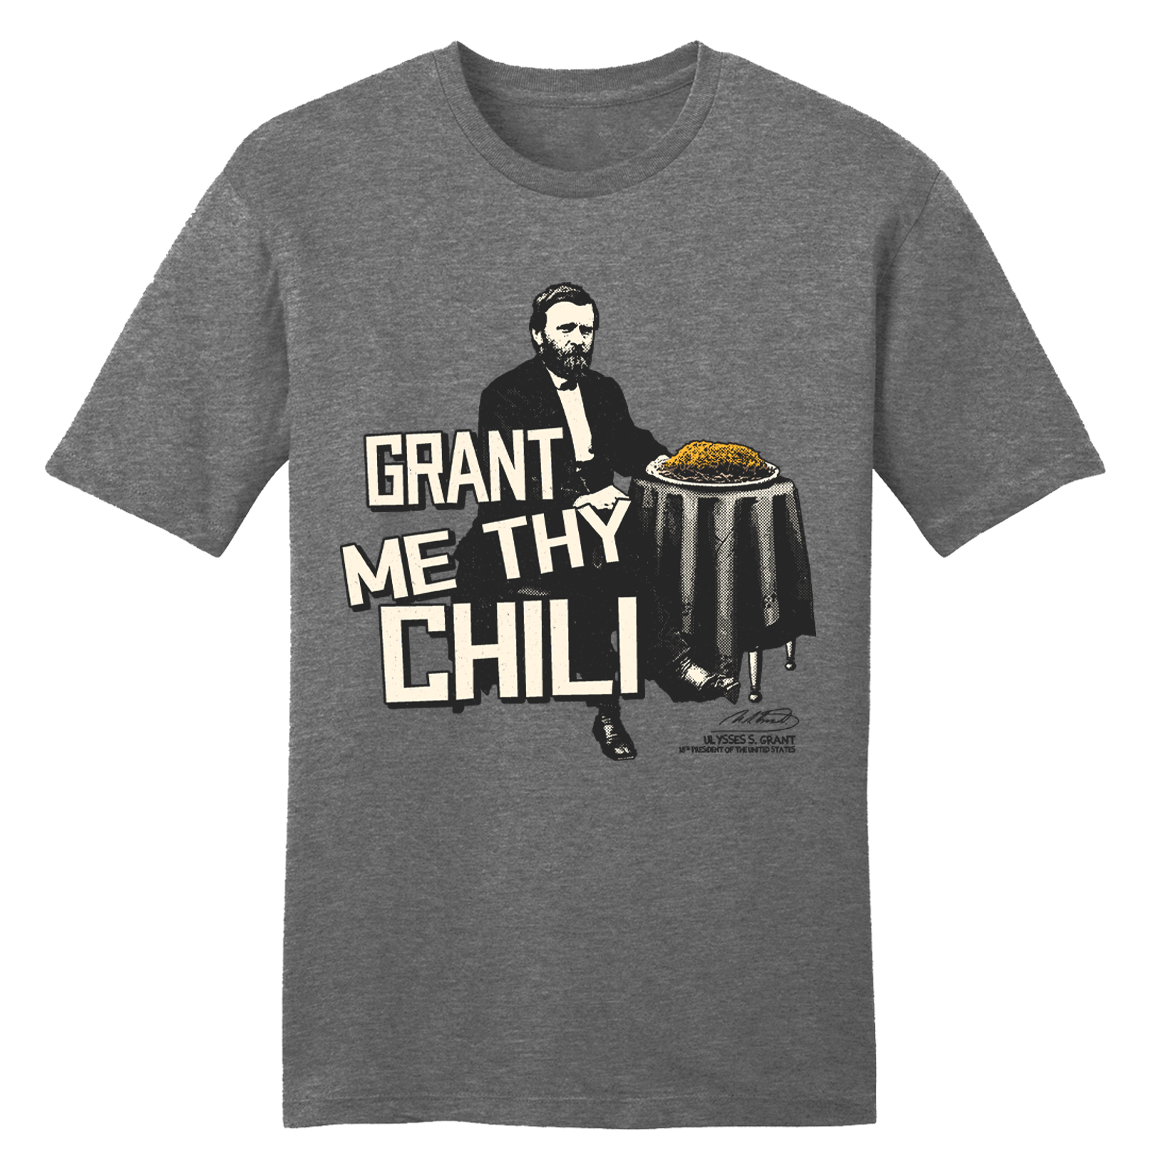 Grant Me Thy Chili T-shirt